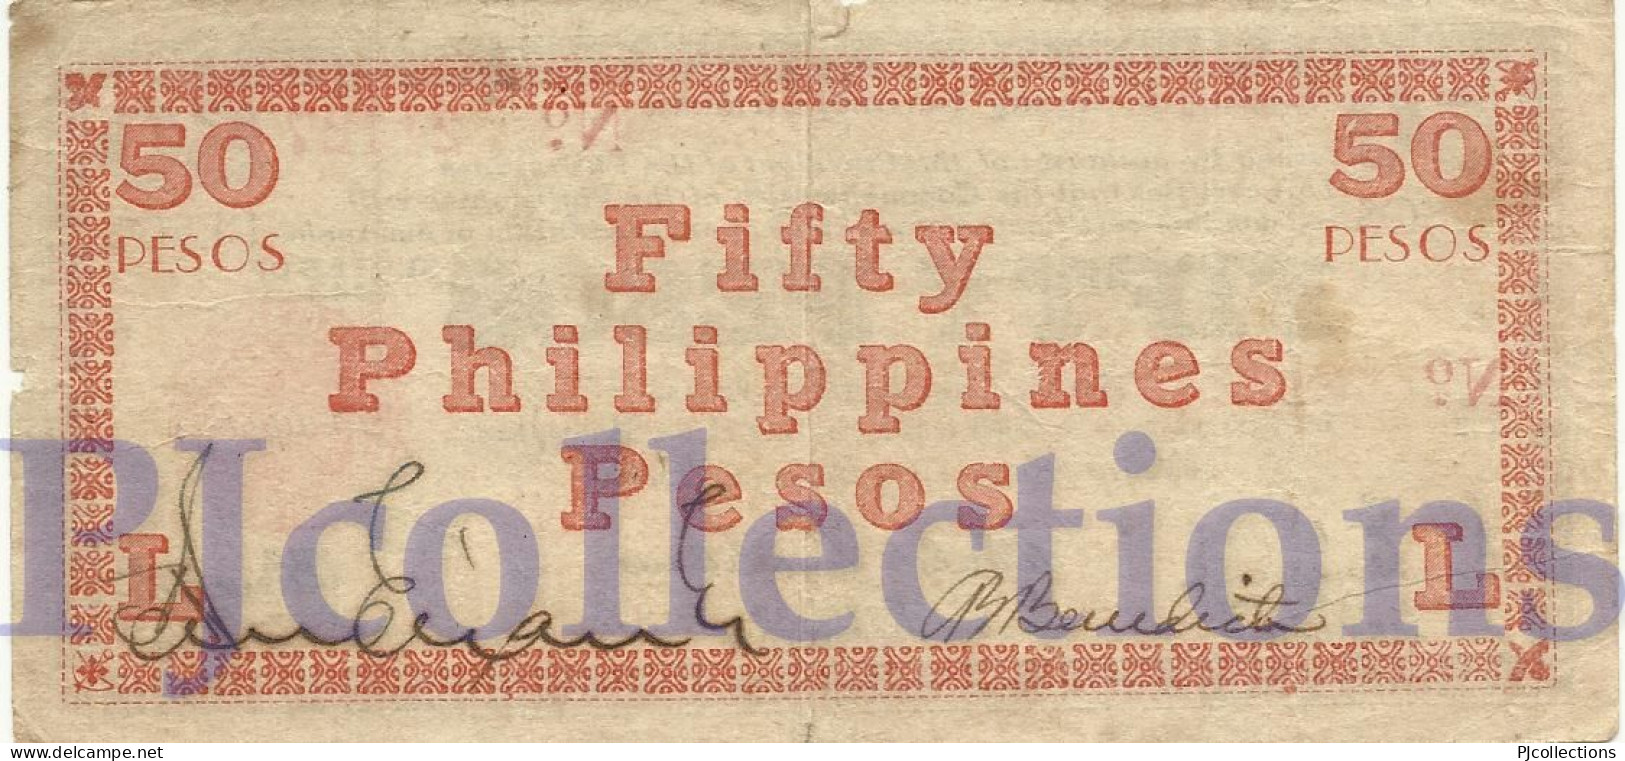 PHILIPPINES 50 PESOS 1943 PICK S665 FINE EMERGENCY BANKNOTE - Philippines